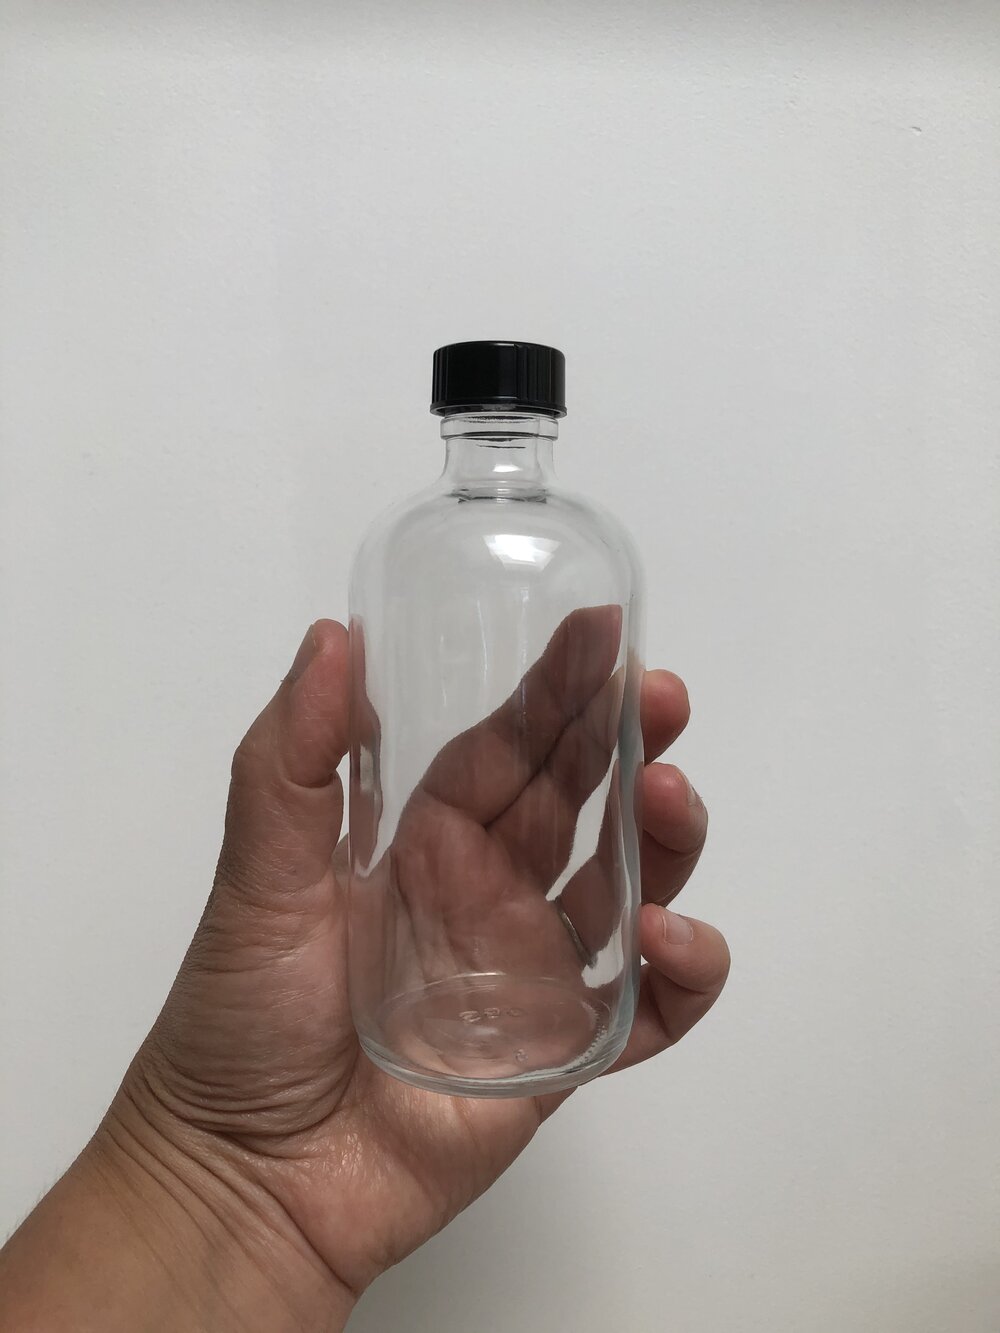 Blank 8oz Amber Glass Bottle for Kitchen, Bath, Laundry, Office